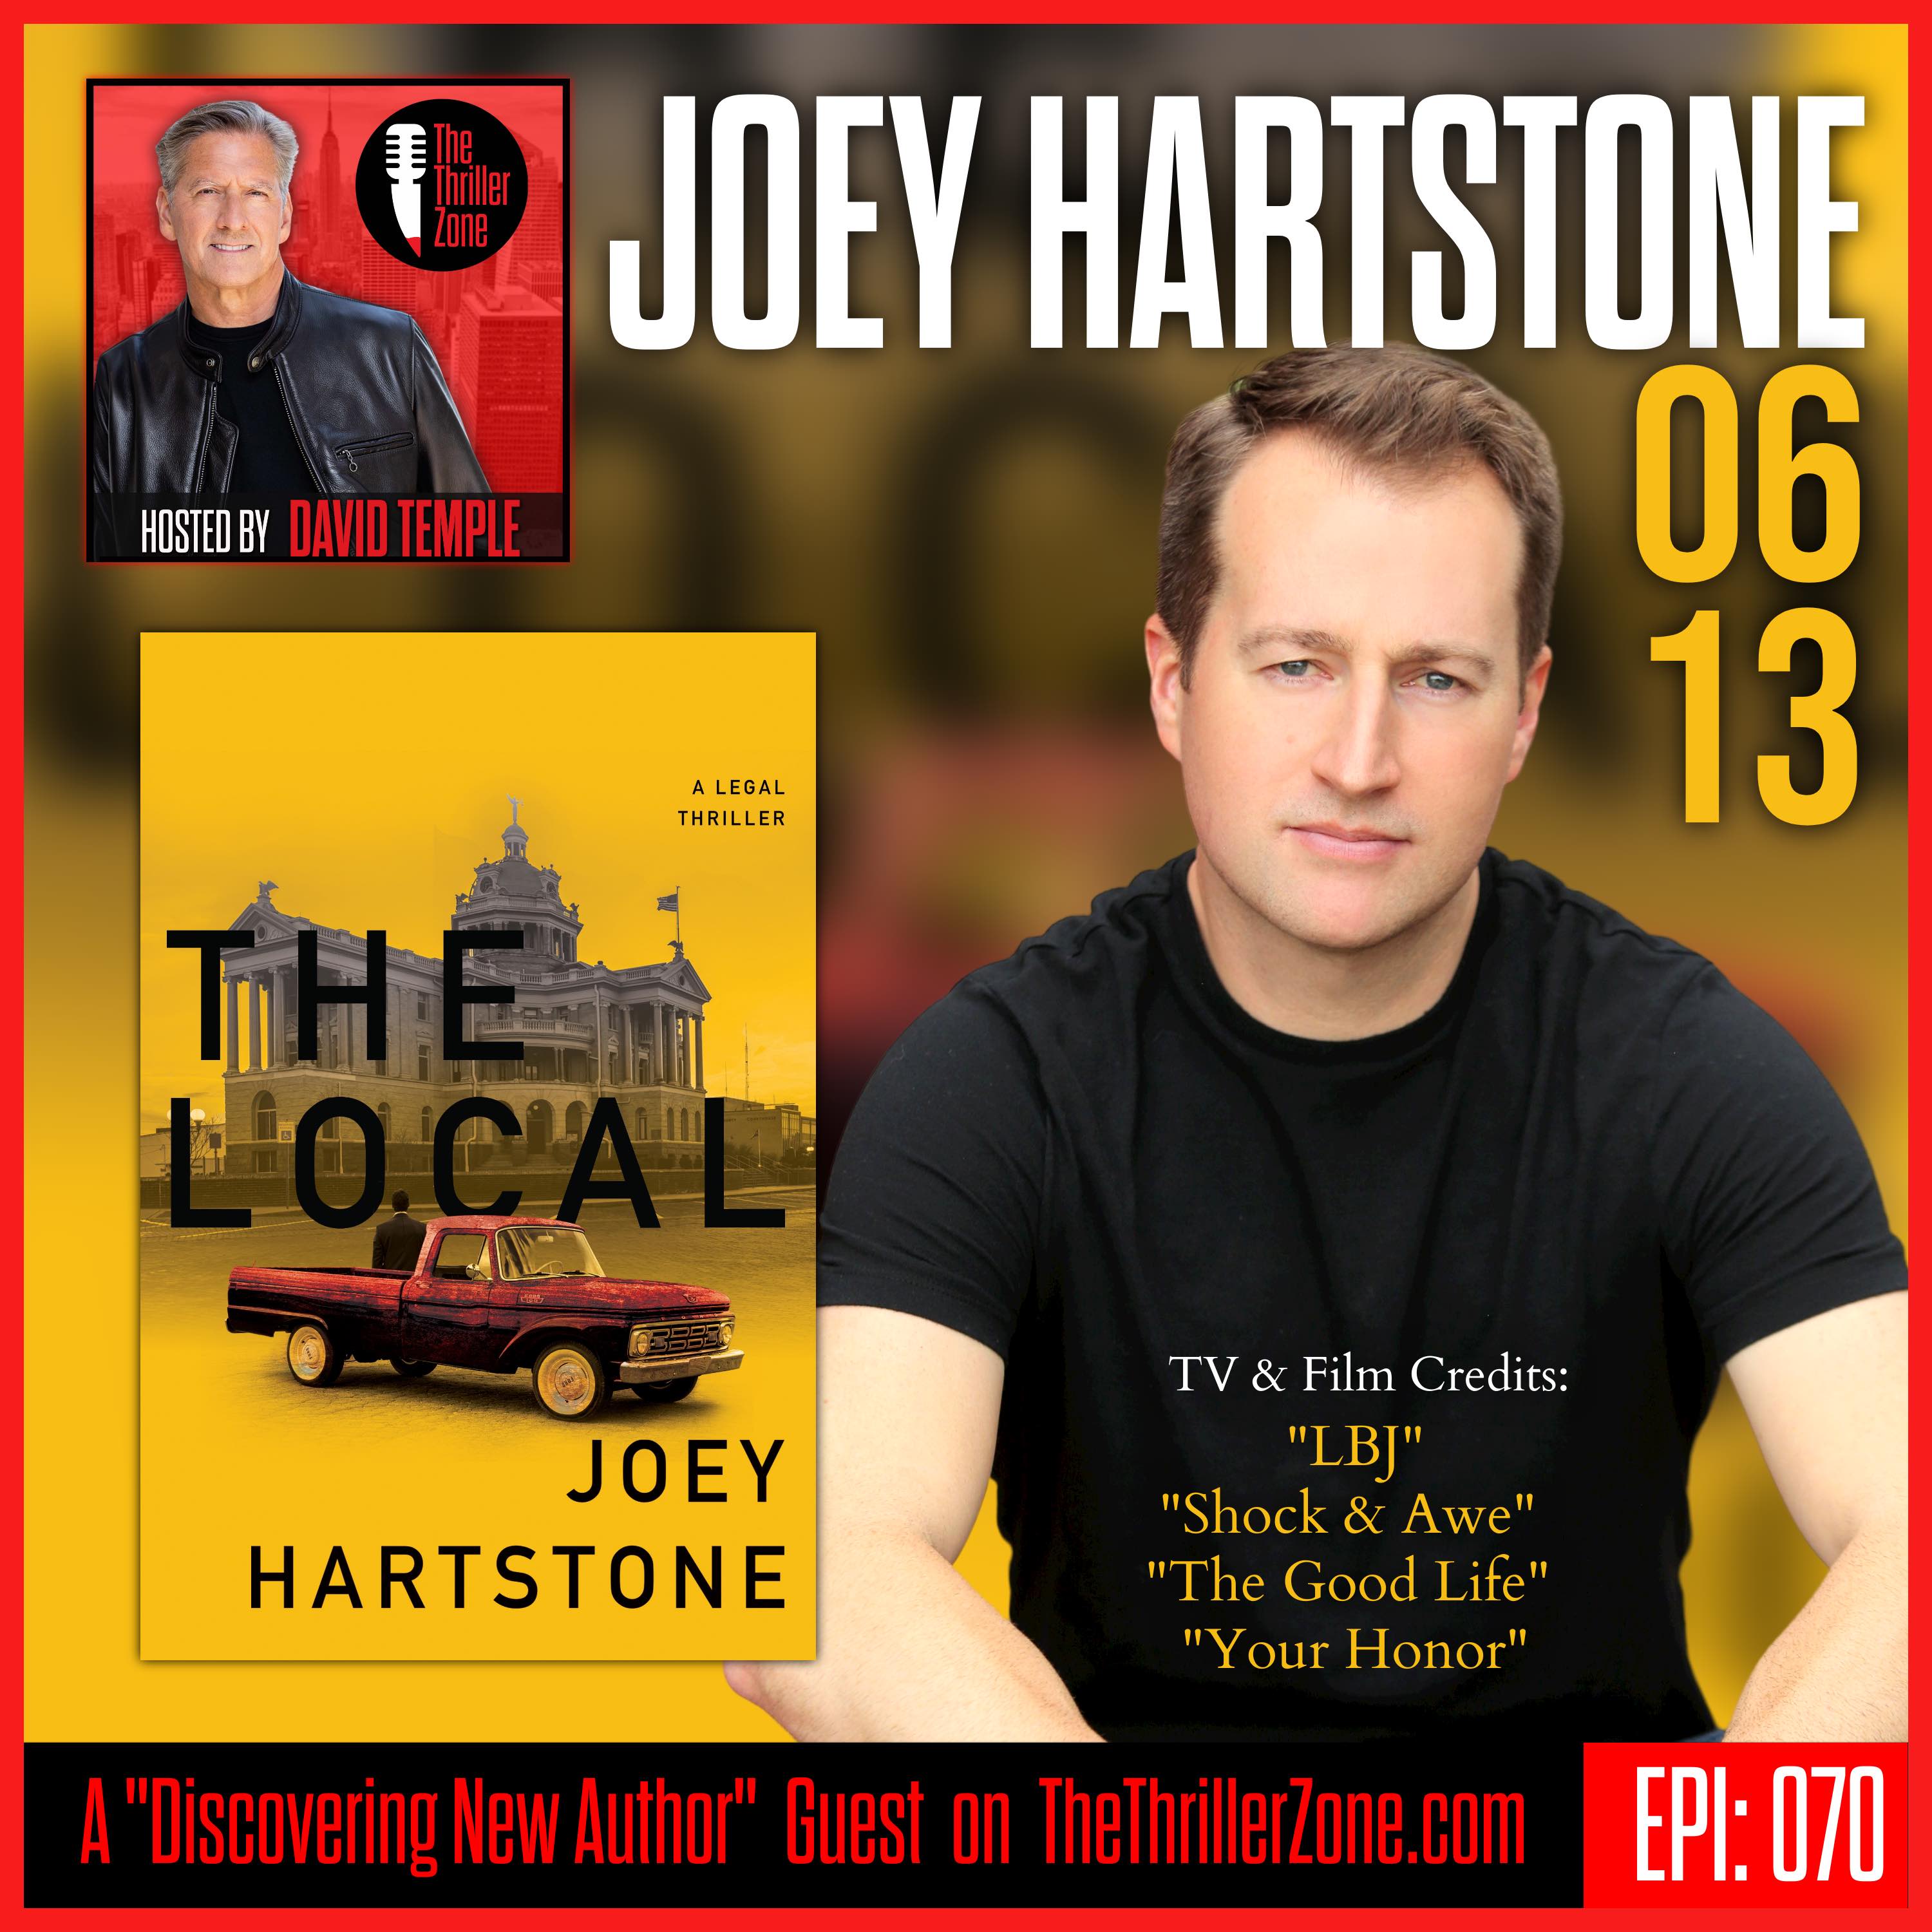 Joey Hartstone, author of The Local